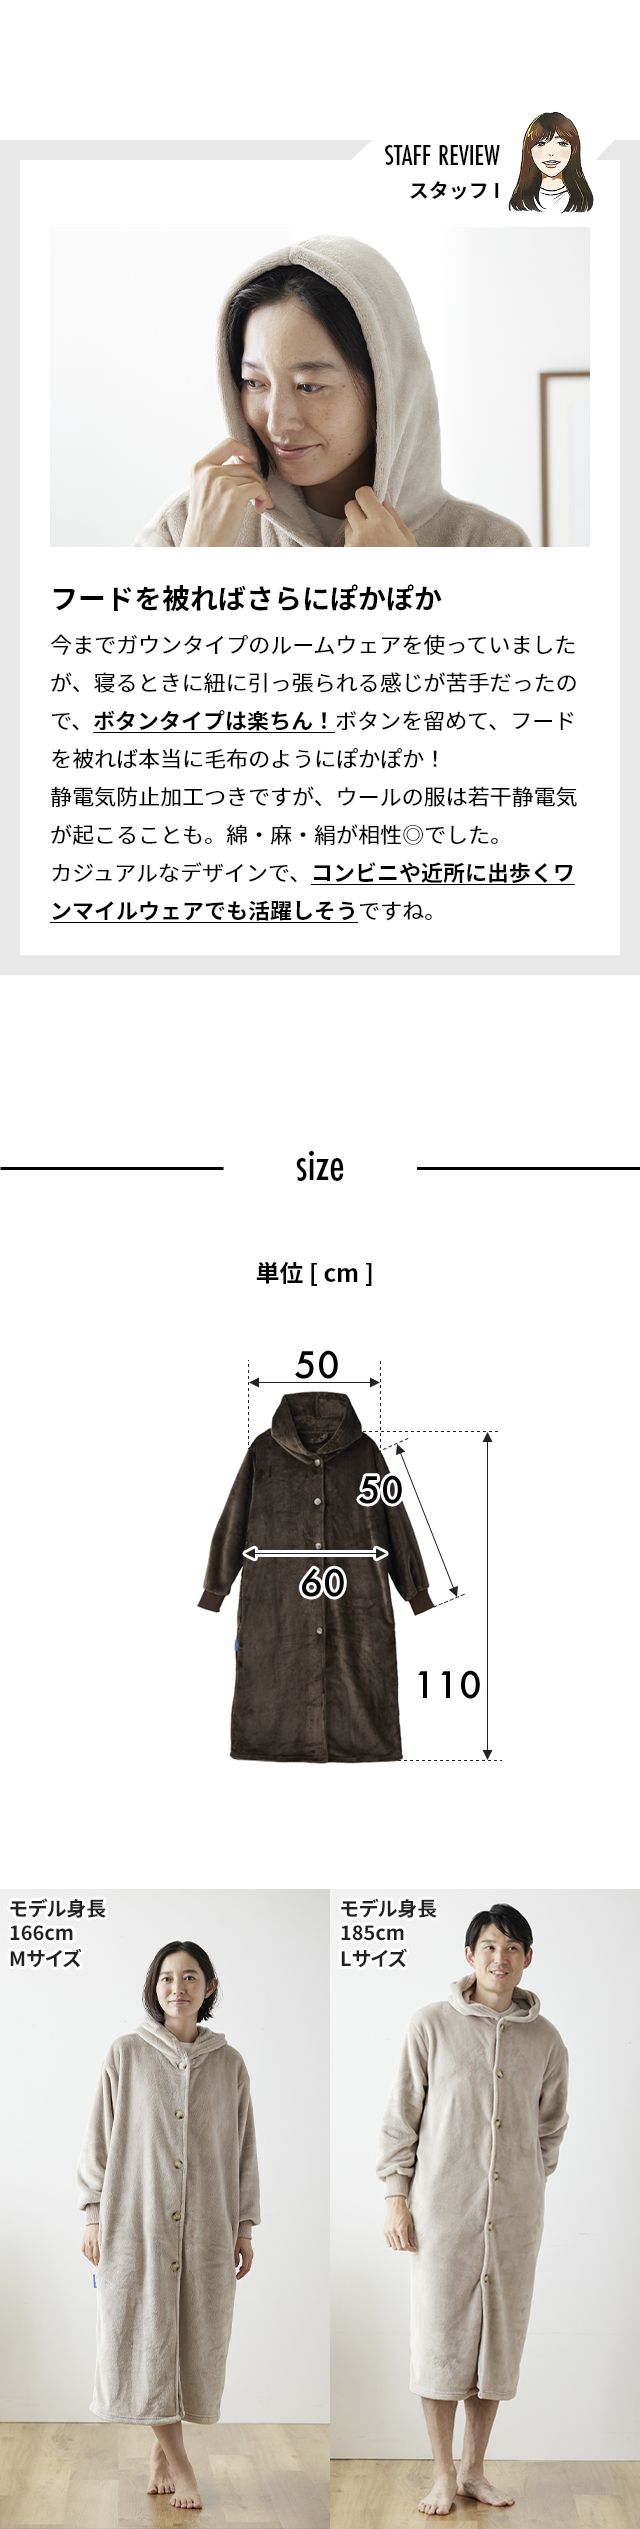 mofua (モフア) プレミアムマイクロファイバー着る毛布 フード付 M 着丈約110cm